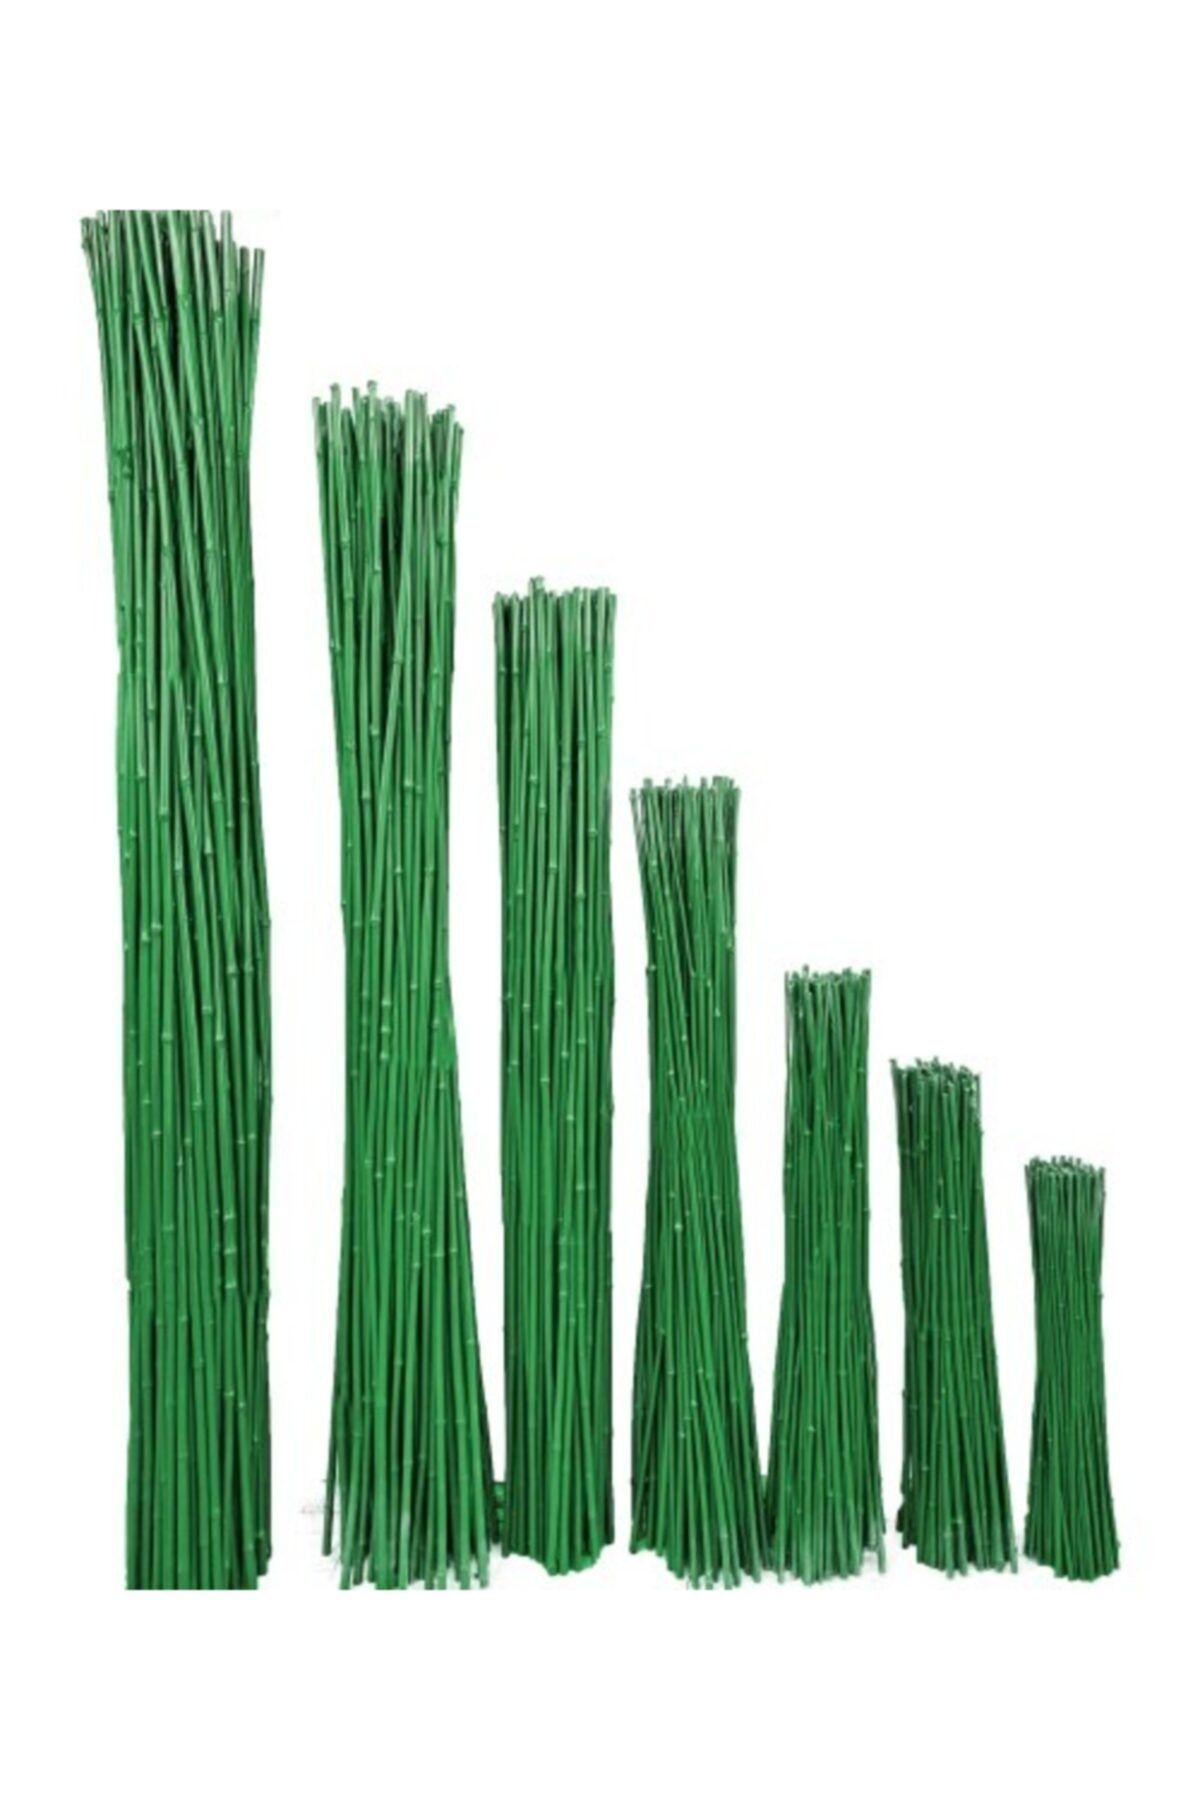 Bahçem 50'li Bambu Üzeri Pwc Kaplı Bitki Destek Çubuğu 60cm